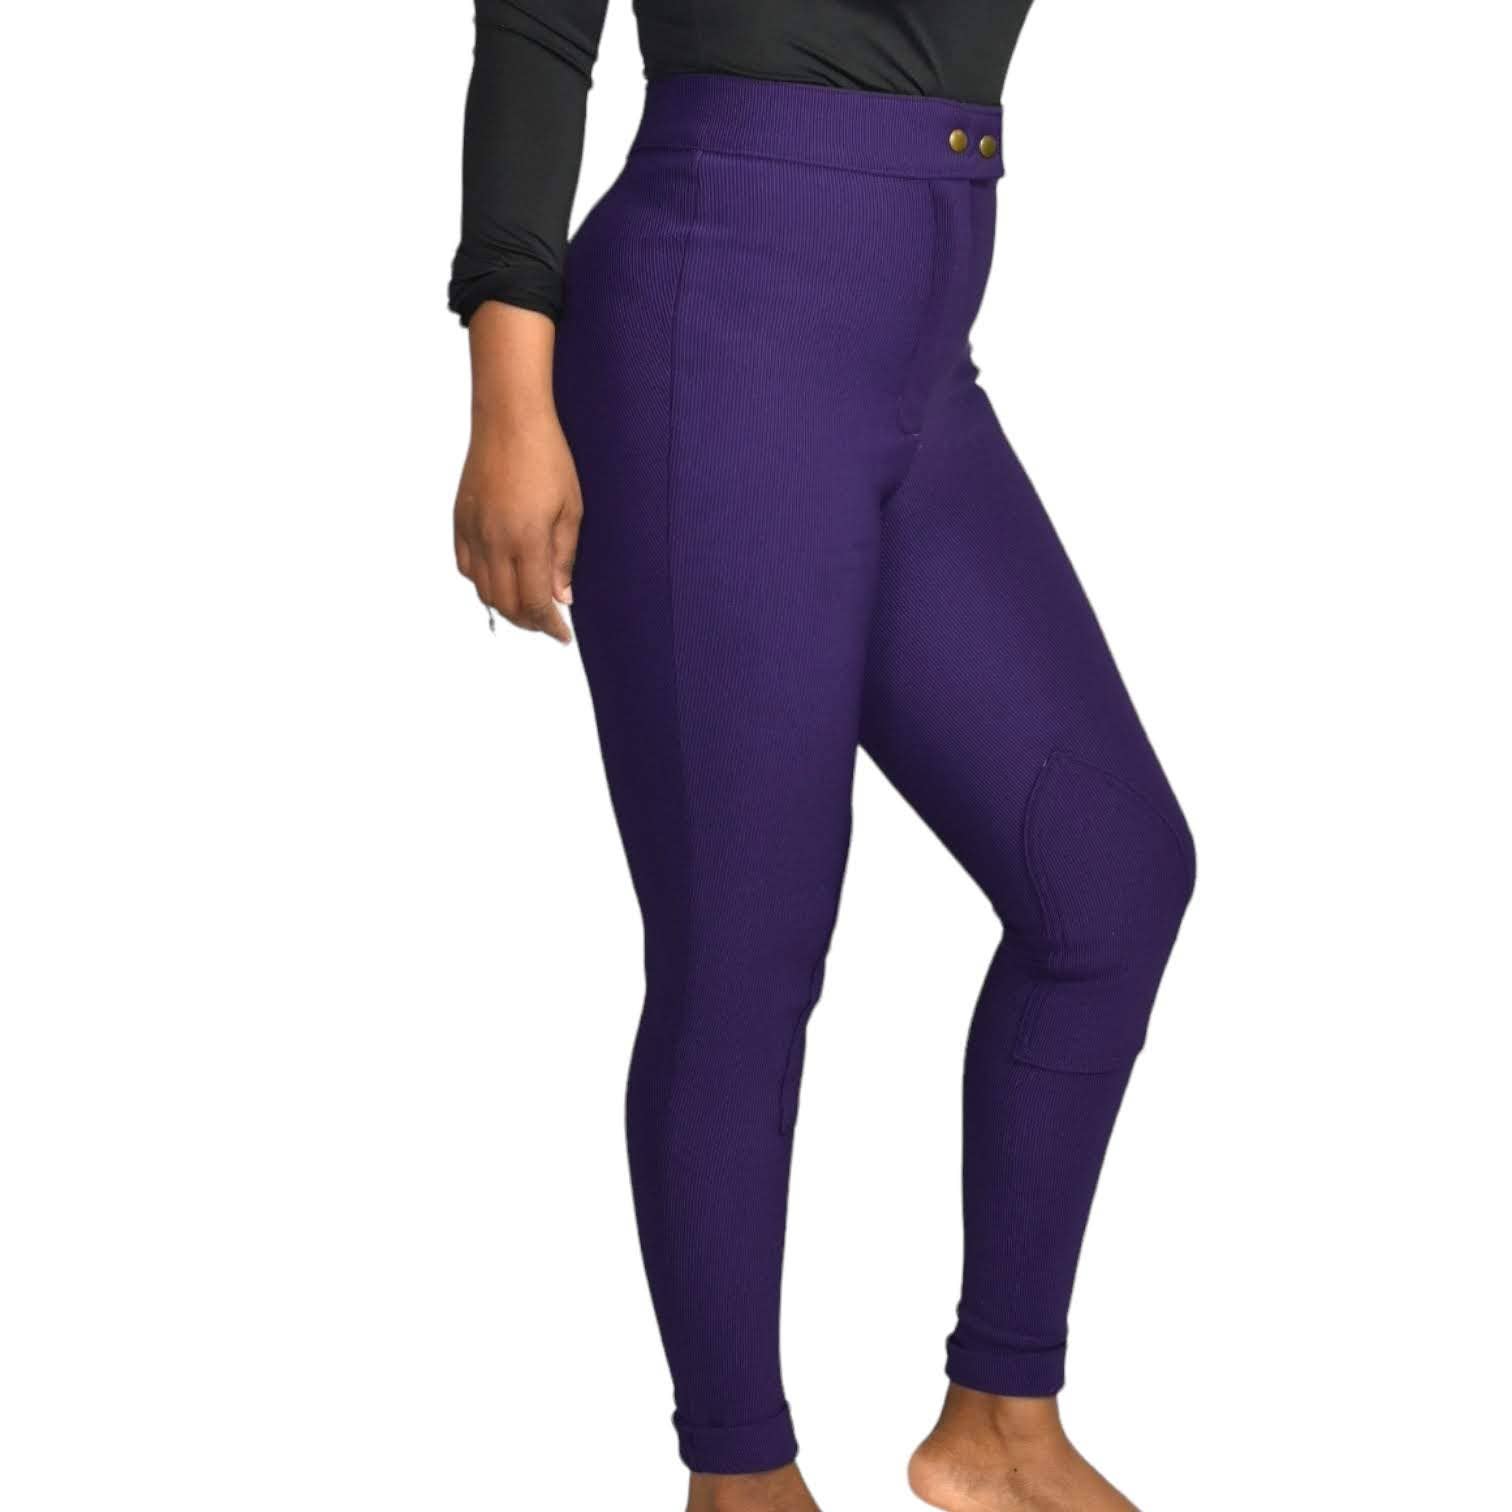 American Apparel Riding Pants Purple Ribbed Nylon High Waisted Slim Size Medium